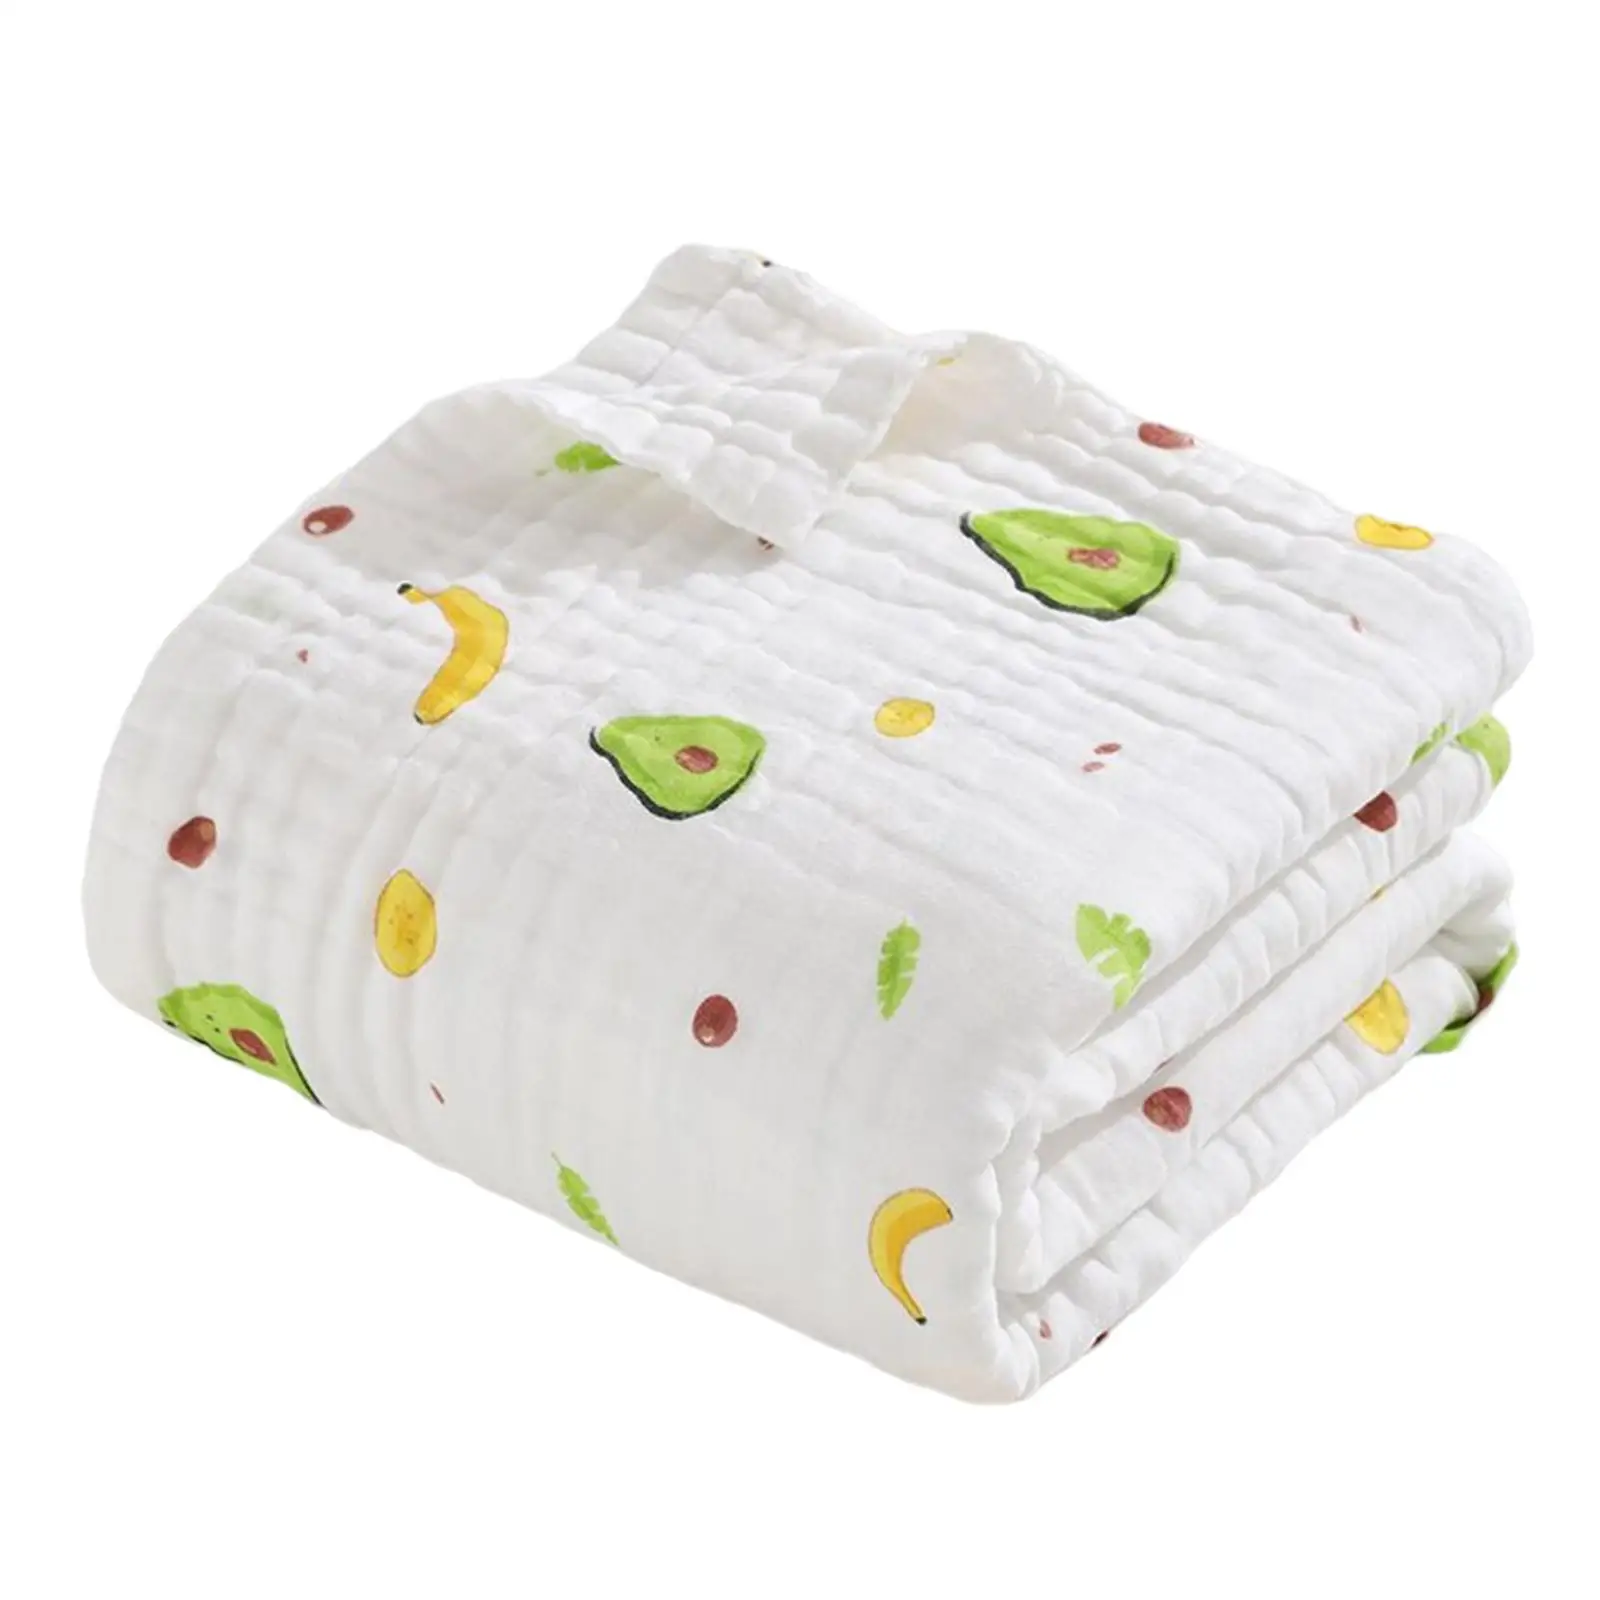 bath Towel, Gauze Cotton Infant Soft Blanket Wrap Newborn Breathable Blanket